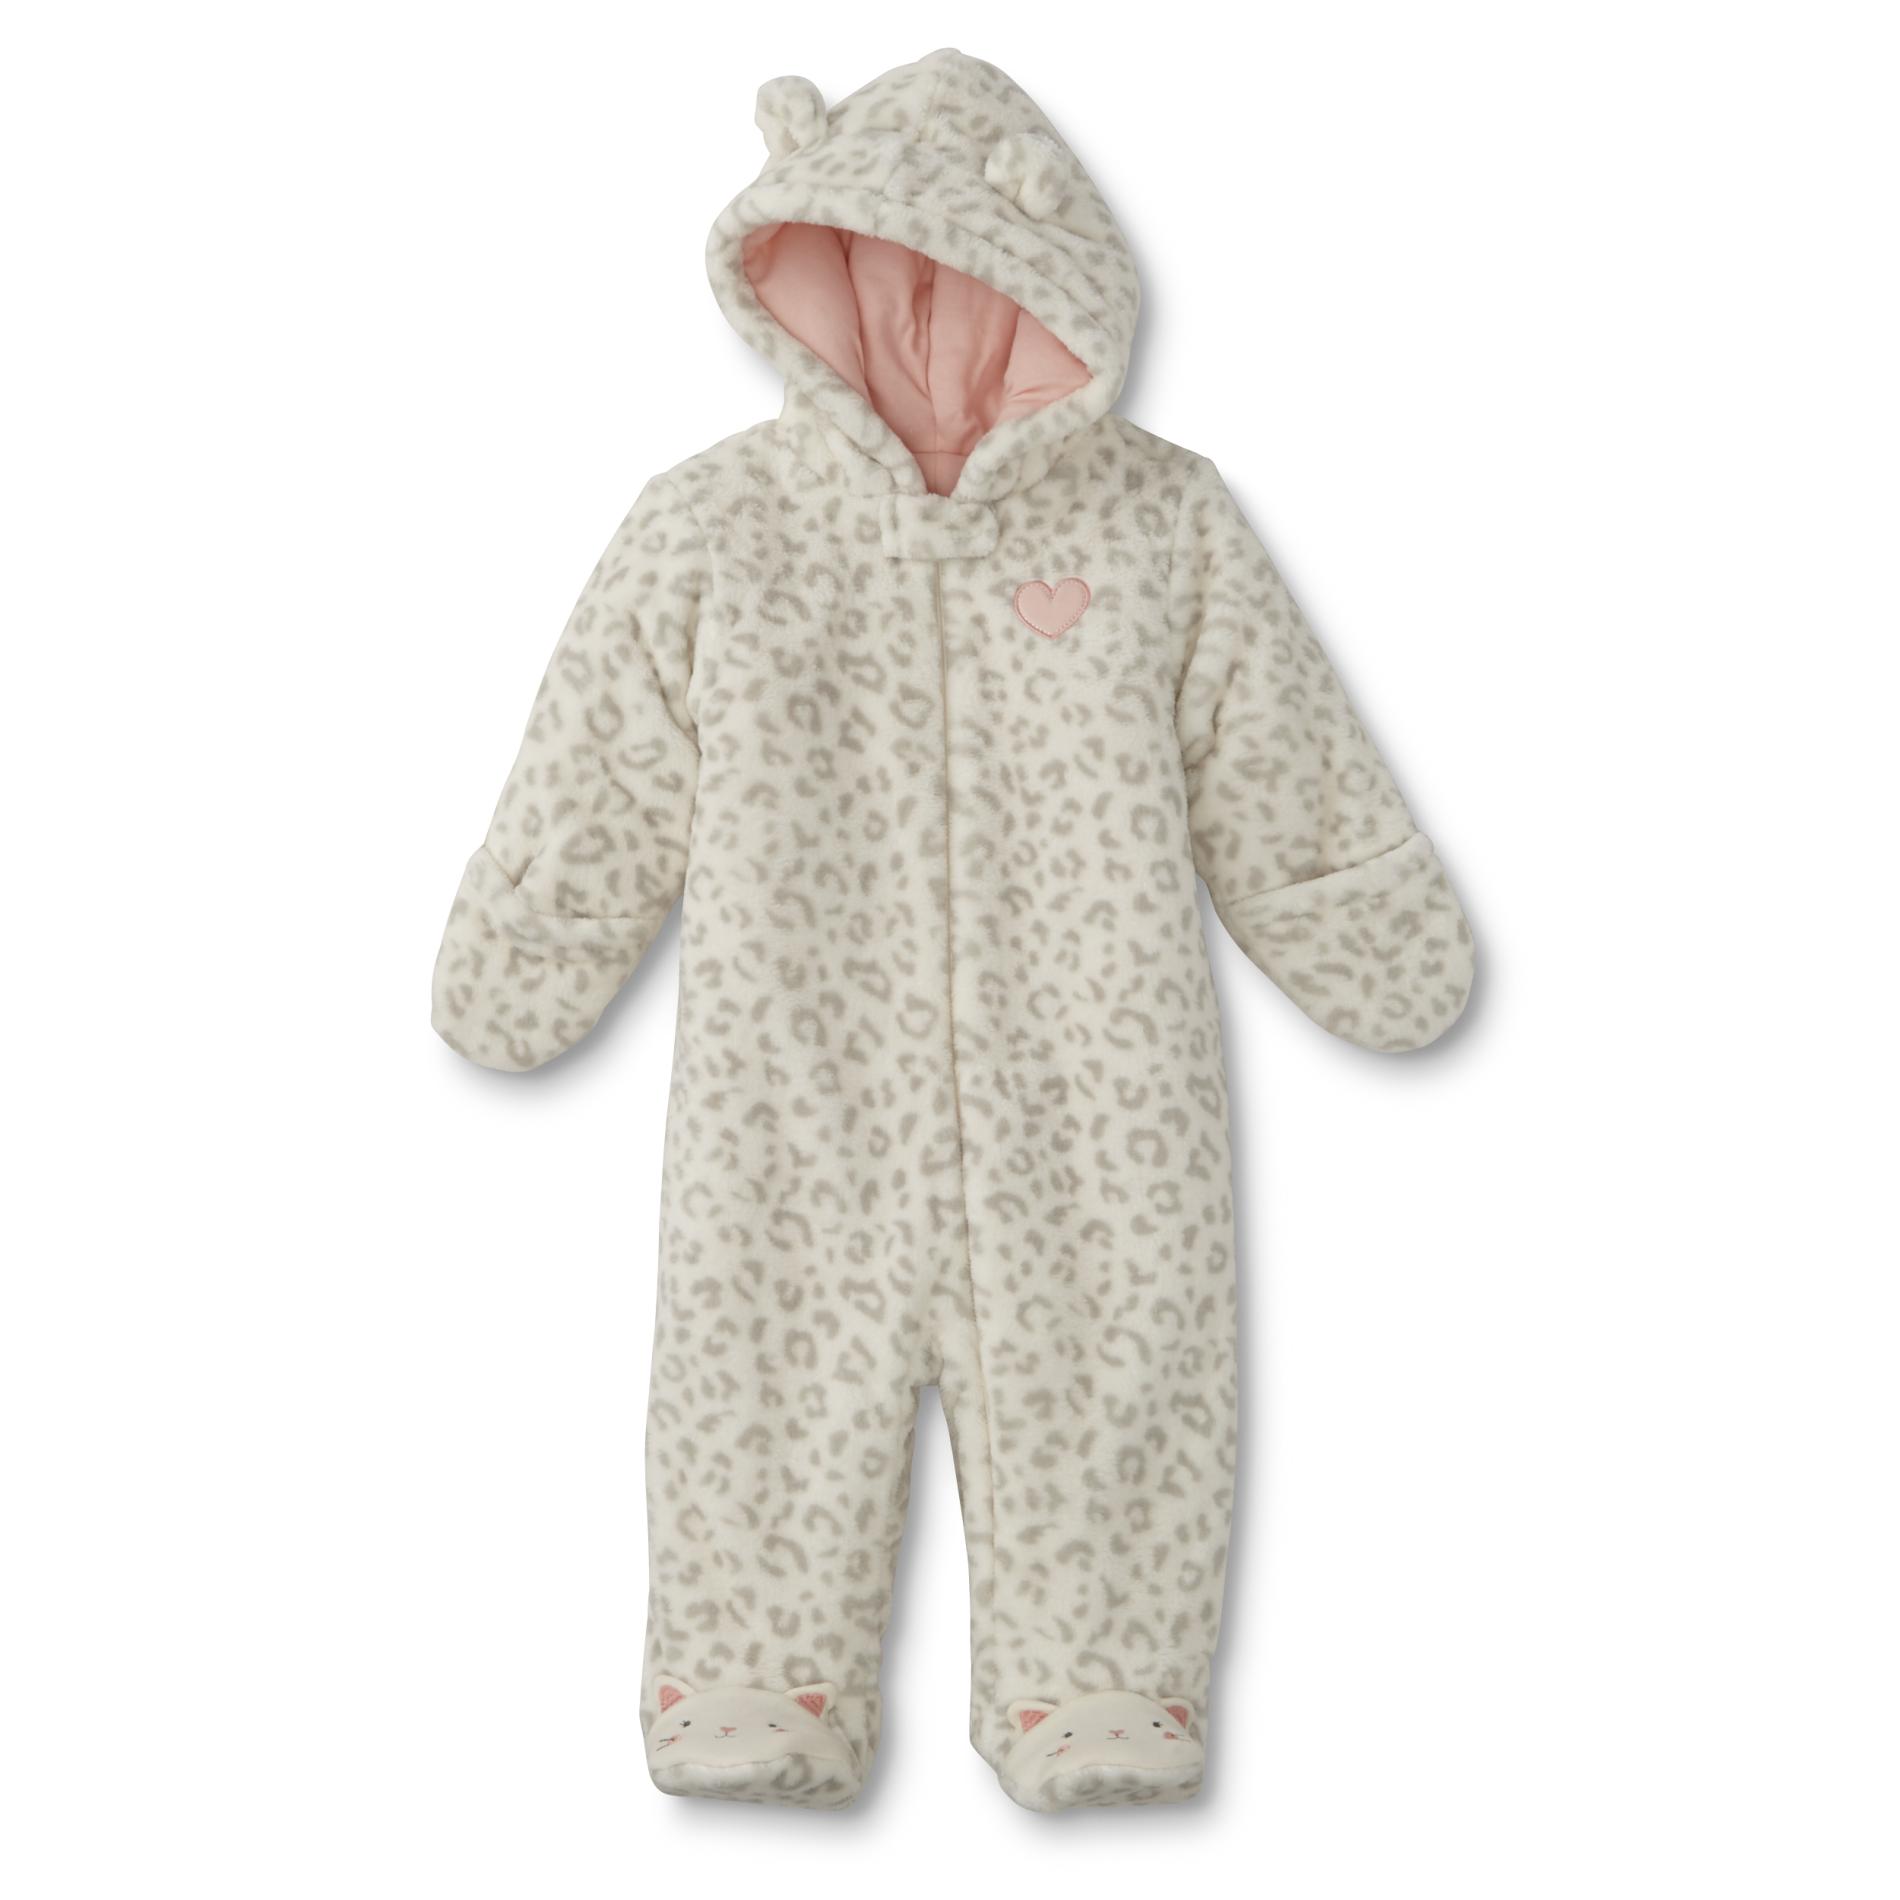 Little Wonders Newborn Girl's Hooded Fleece Pram Suit - Cat